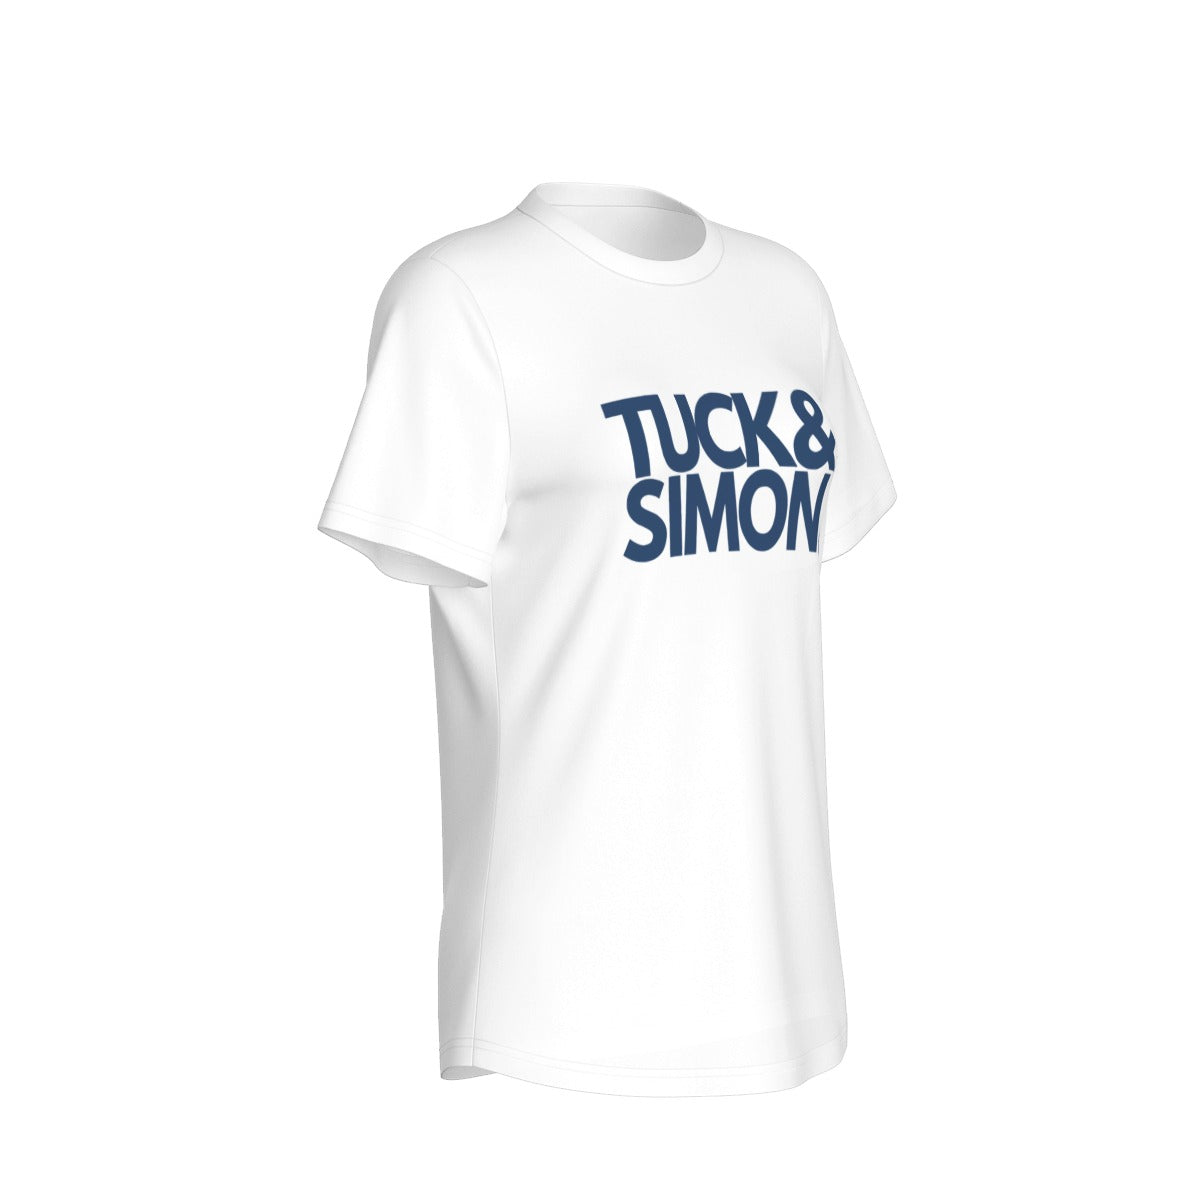 Teen - Plus Size Tuck&Simon White Casual T-Shirt